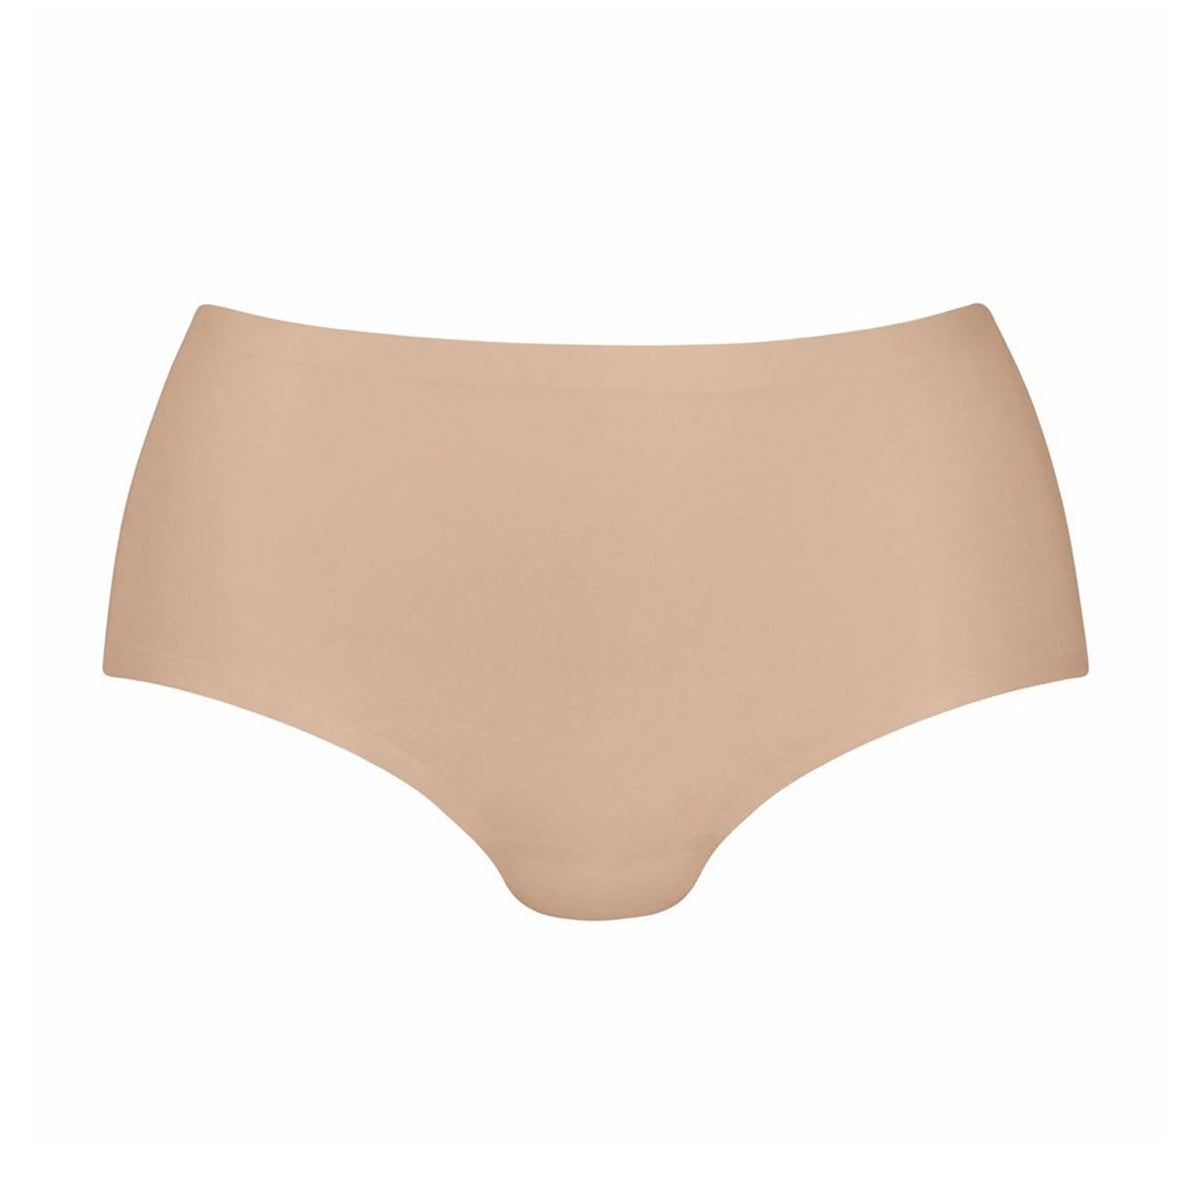 ELEG & STILANCE Women's Seamless Panties Solid Bikini Highcut